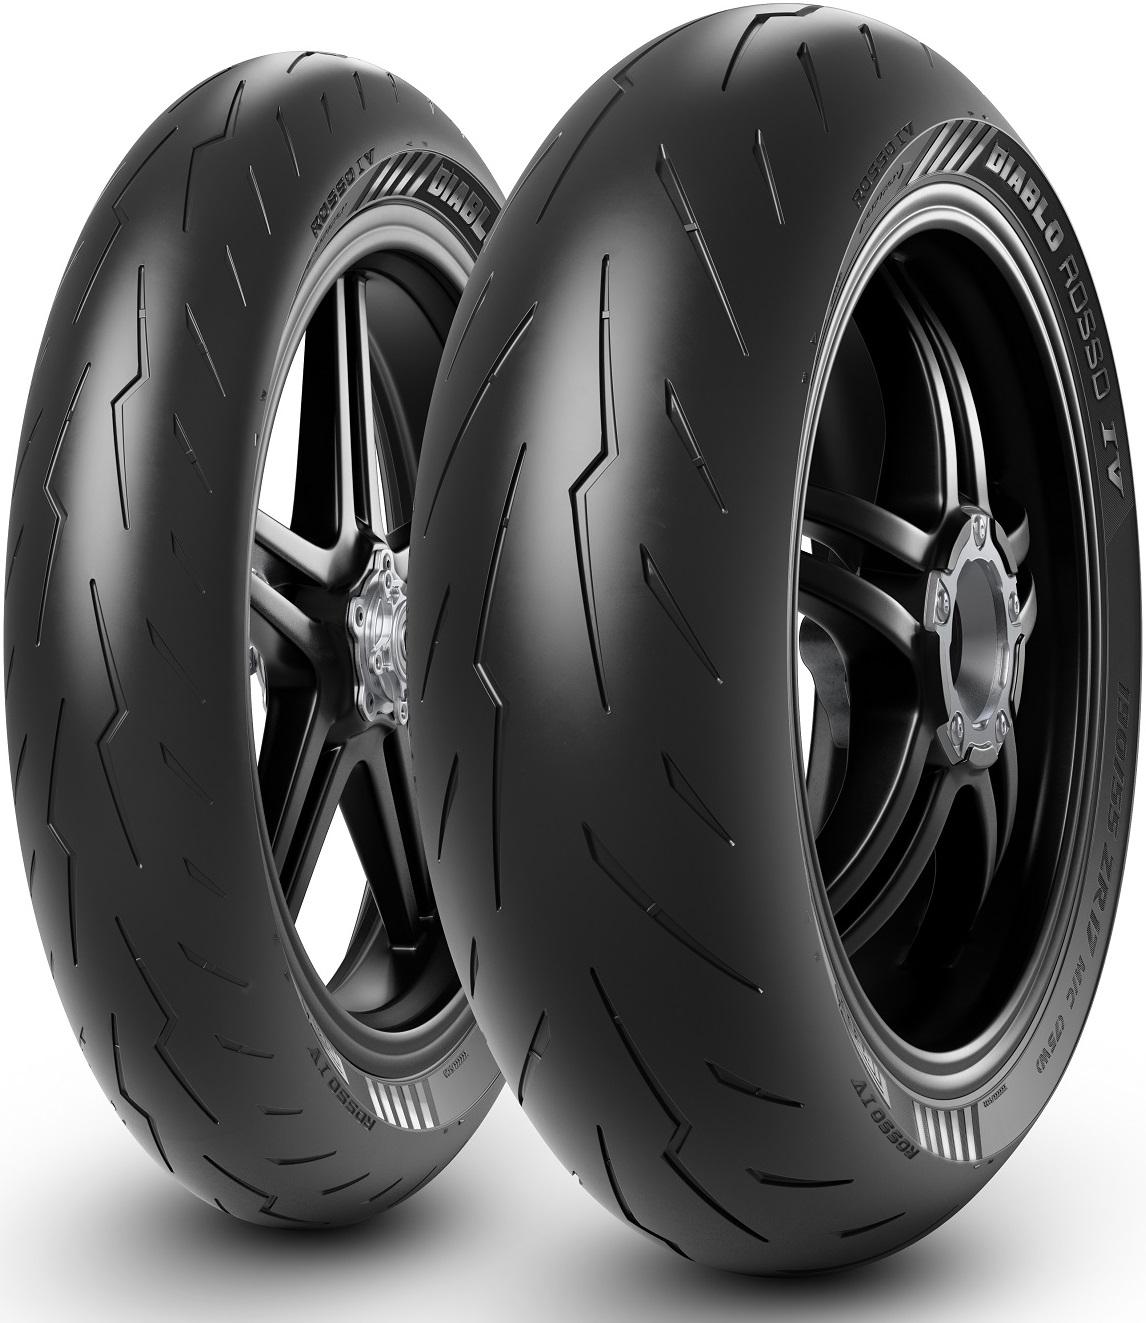 Pirelli Diablo Rosso IV Tyres